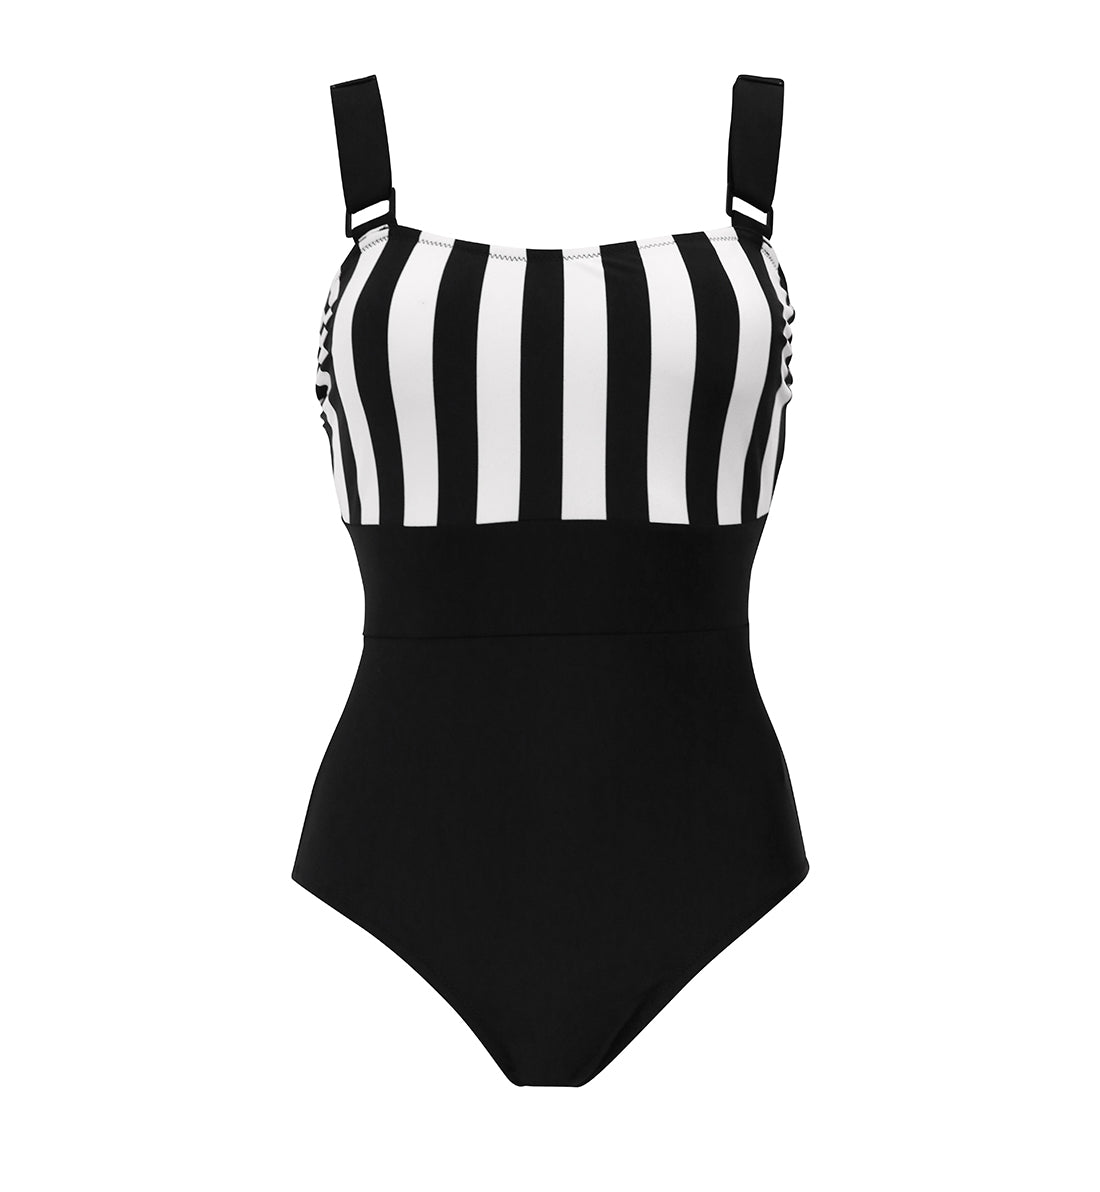 Pour Moi Colour Block Control Swimsuit (1415),Small,Black/White - Black/White,Small